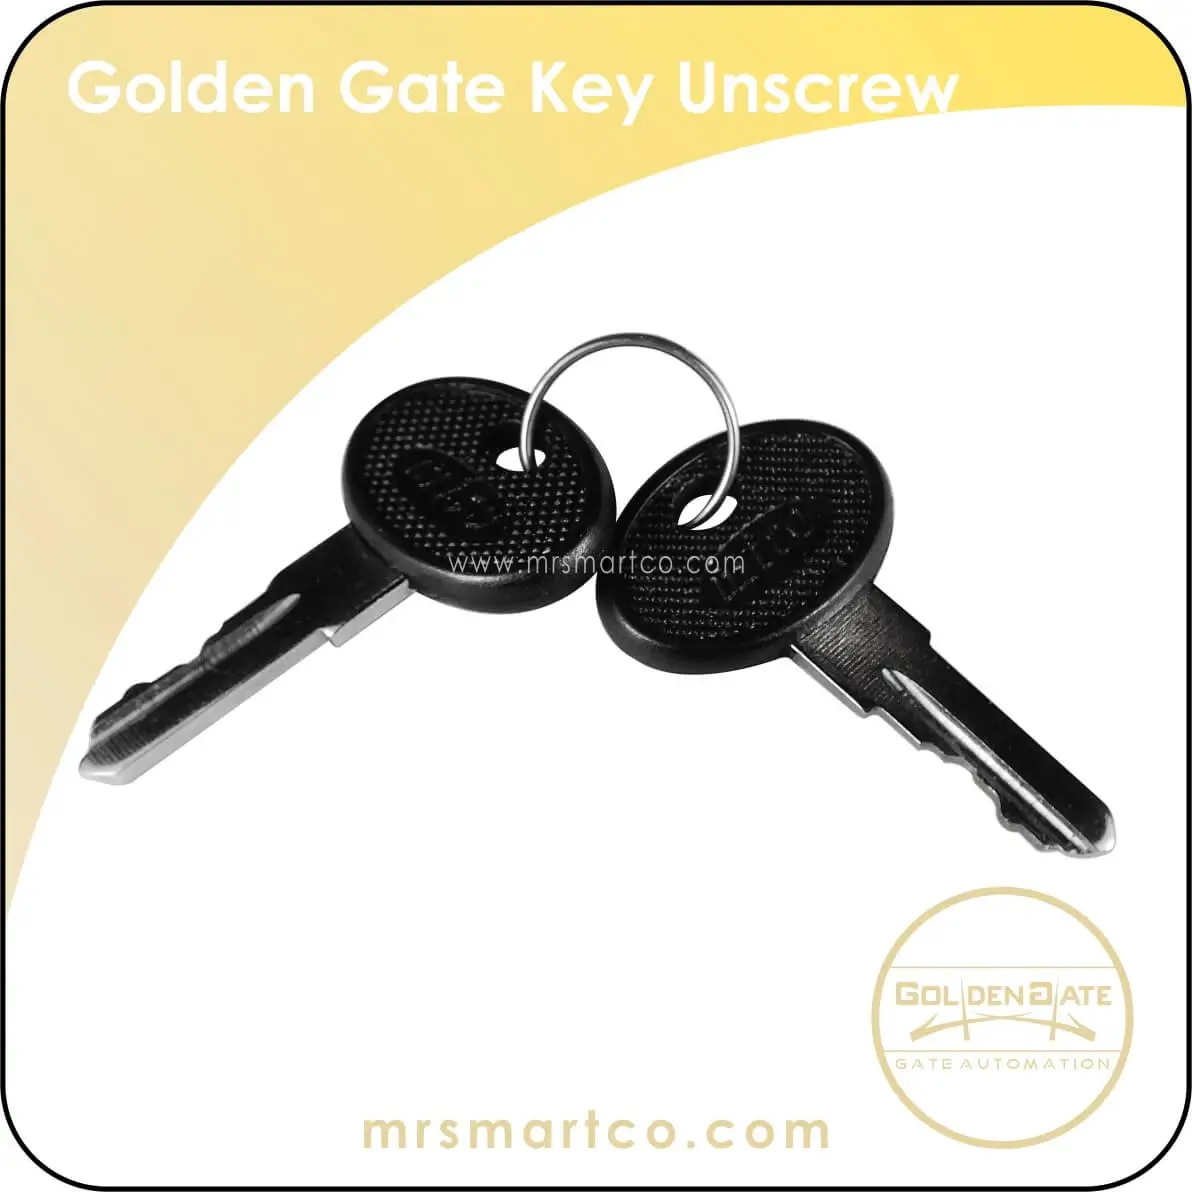 Golden Gate Key Unscrew